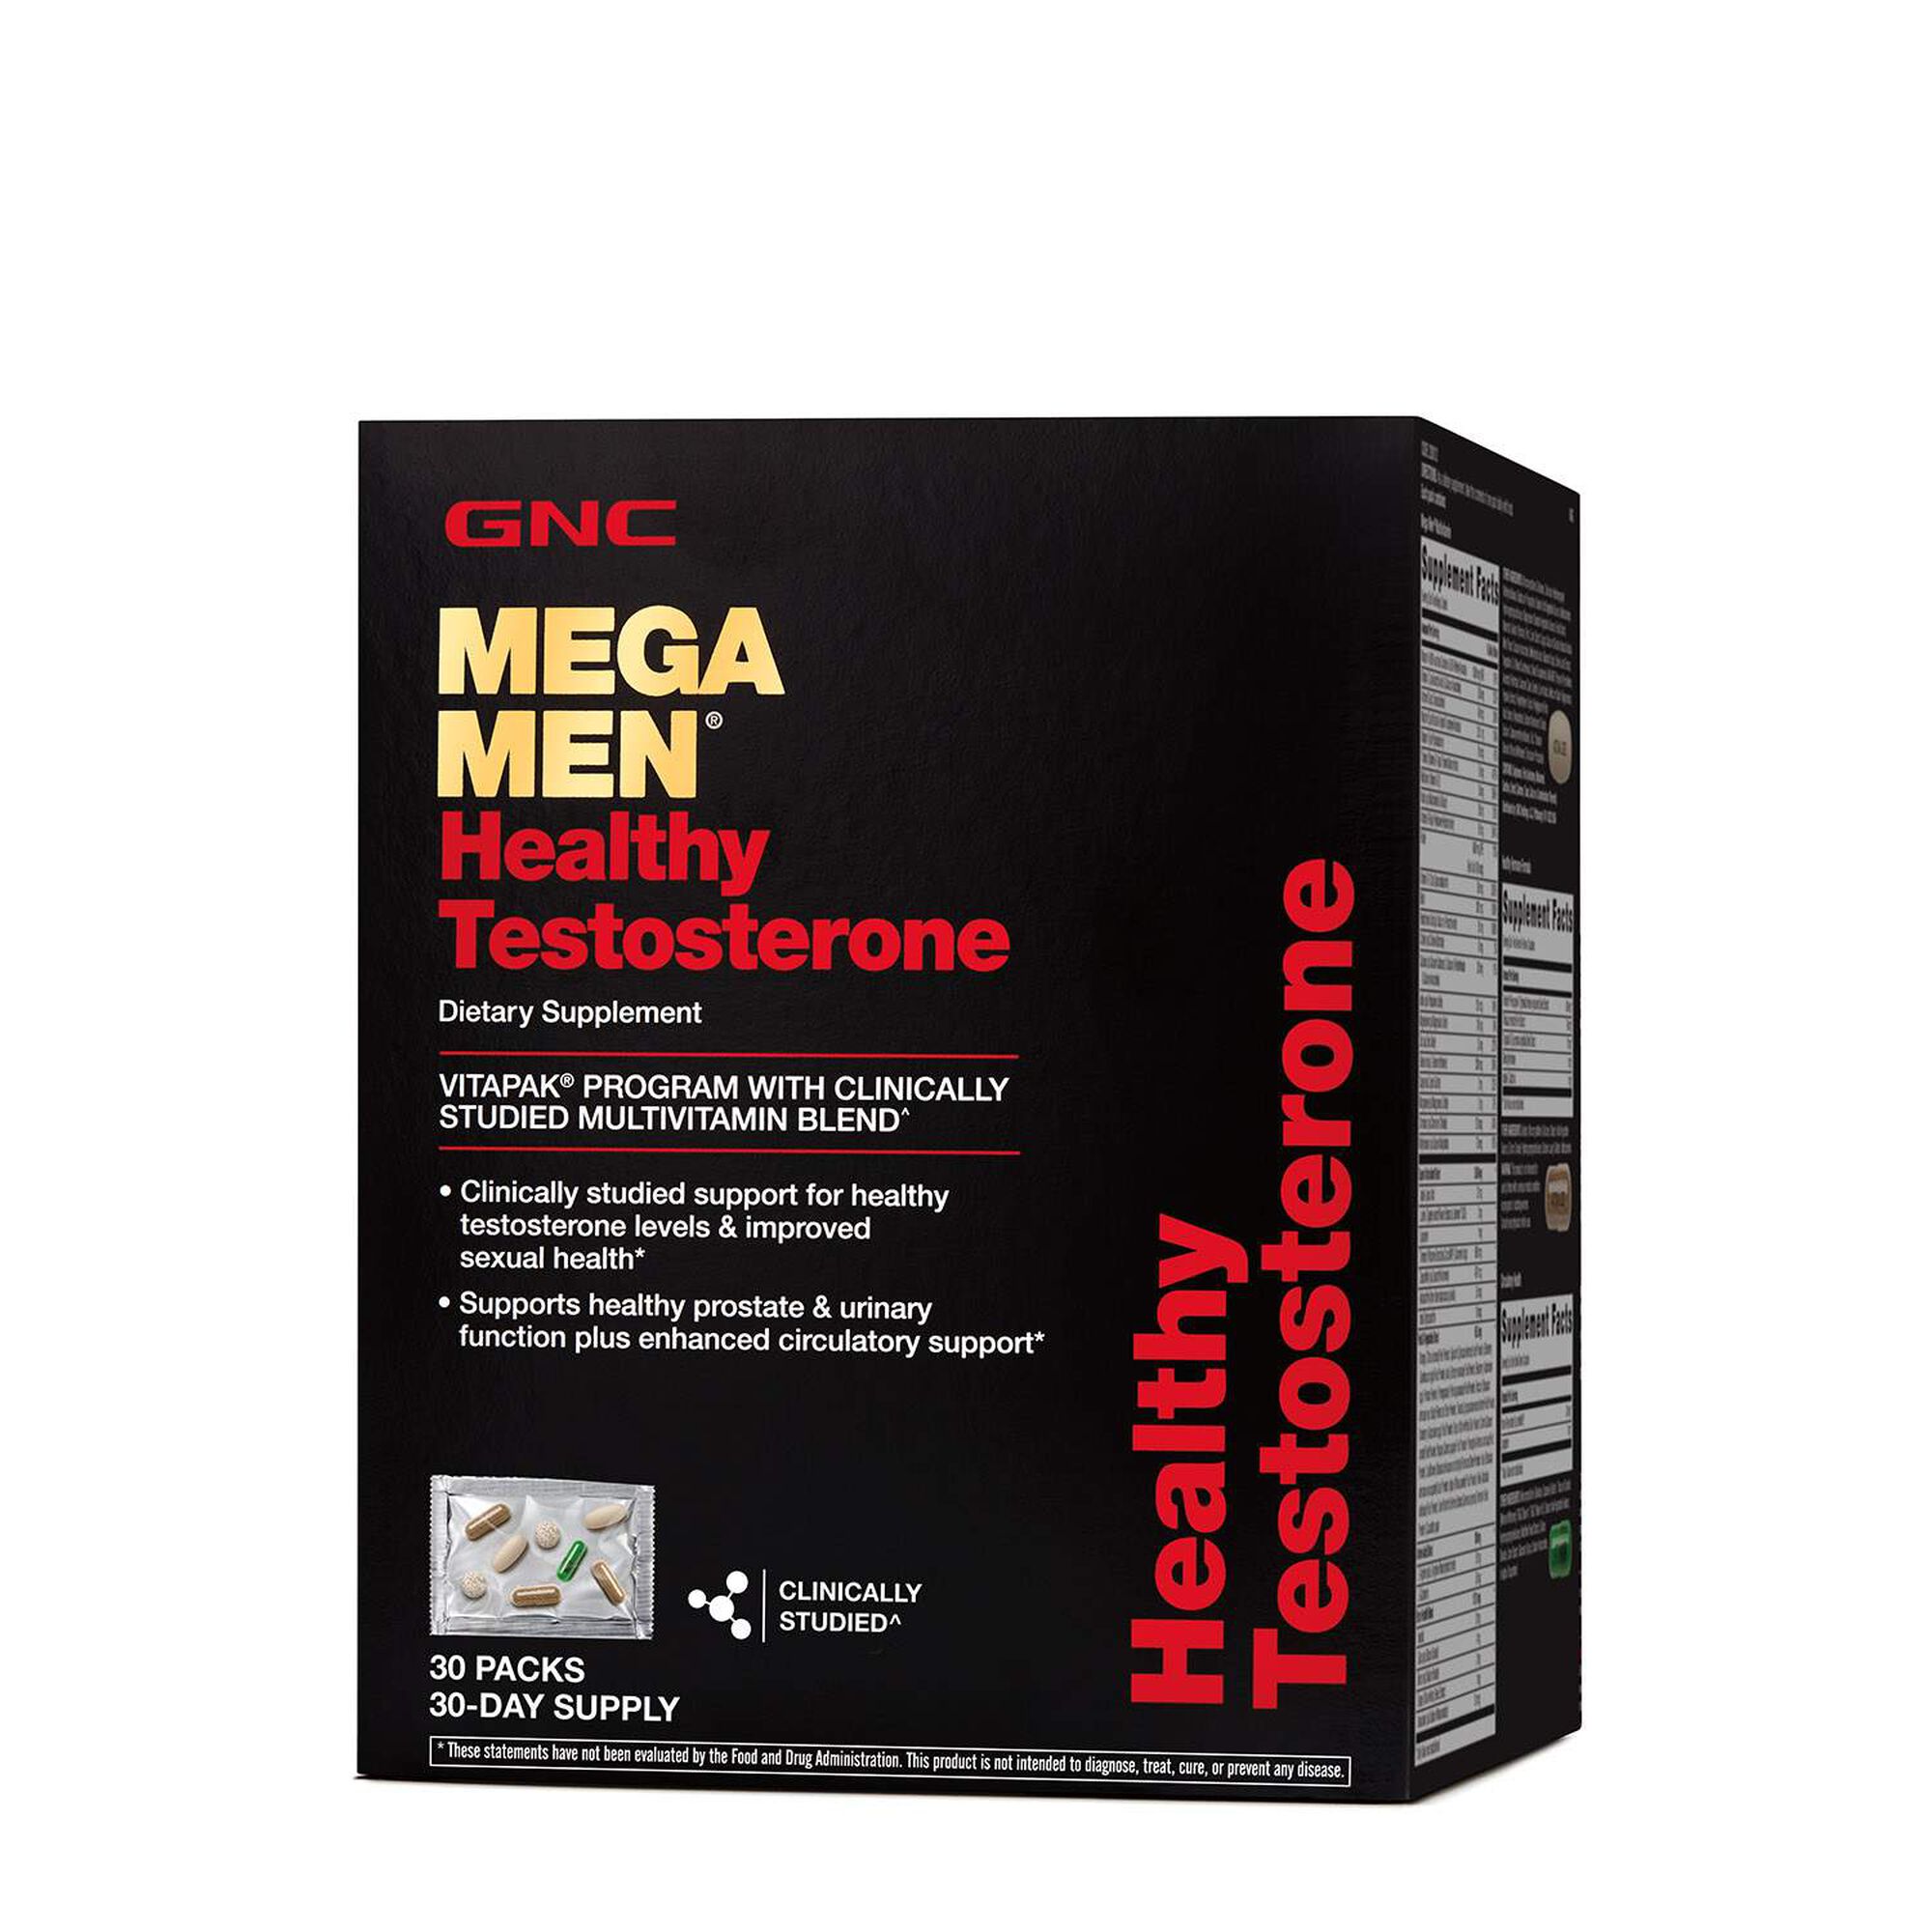 Healthy Testosterone Vitapak® Program | GNC